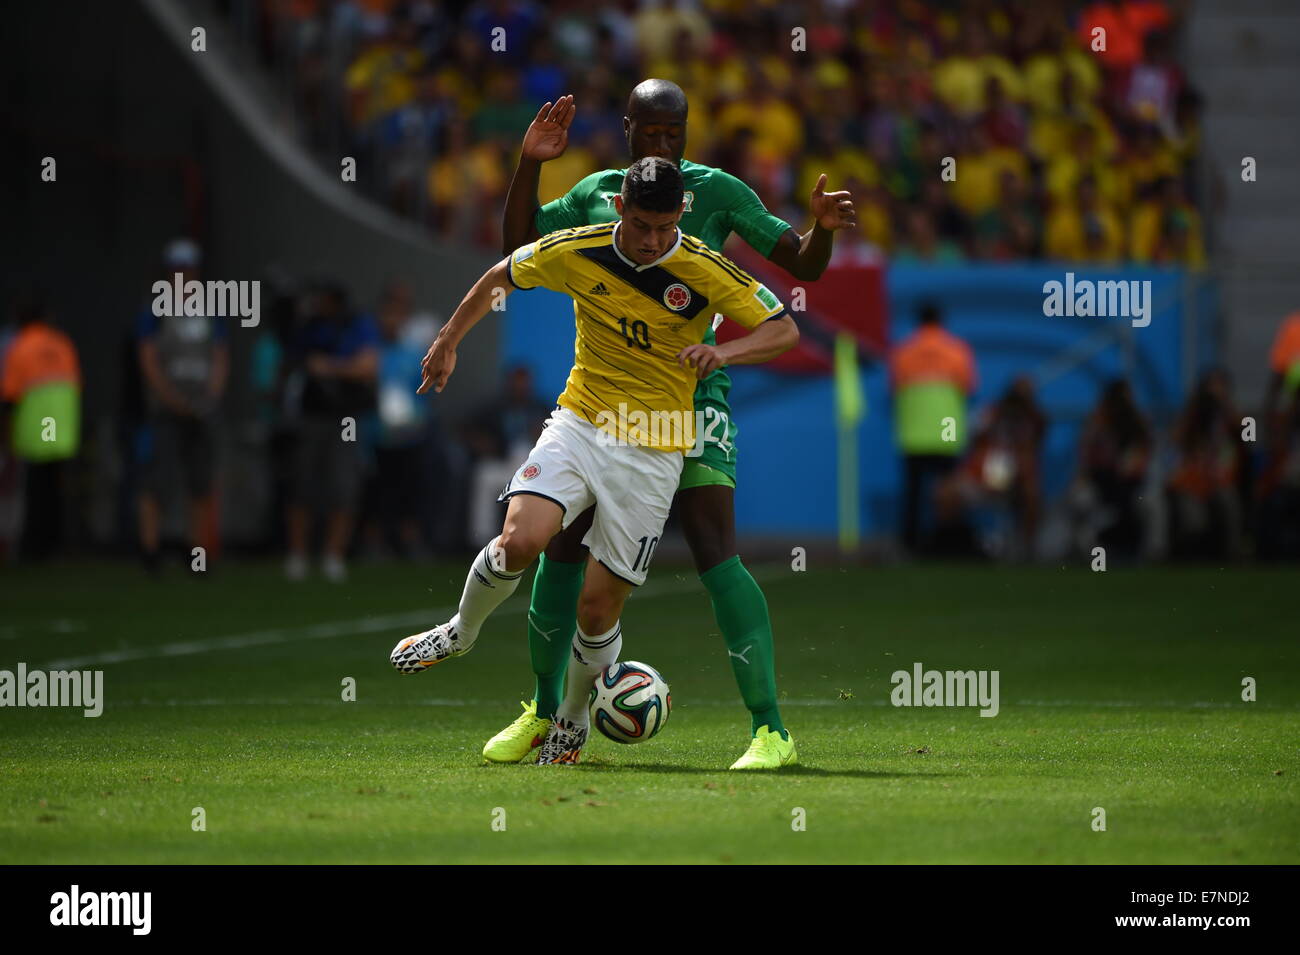 James Rodriguez.Colombia v Ivory Coast. Group match. FIFA World Cup 2014 Brazil. National stadium, Brasilia. 19 Jun 2014. Stock Photo